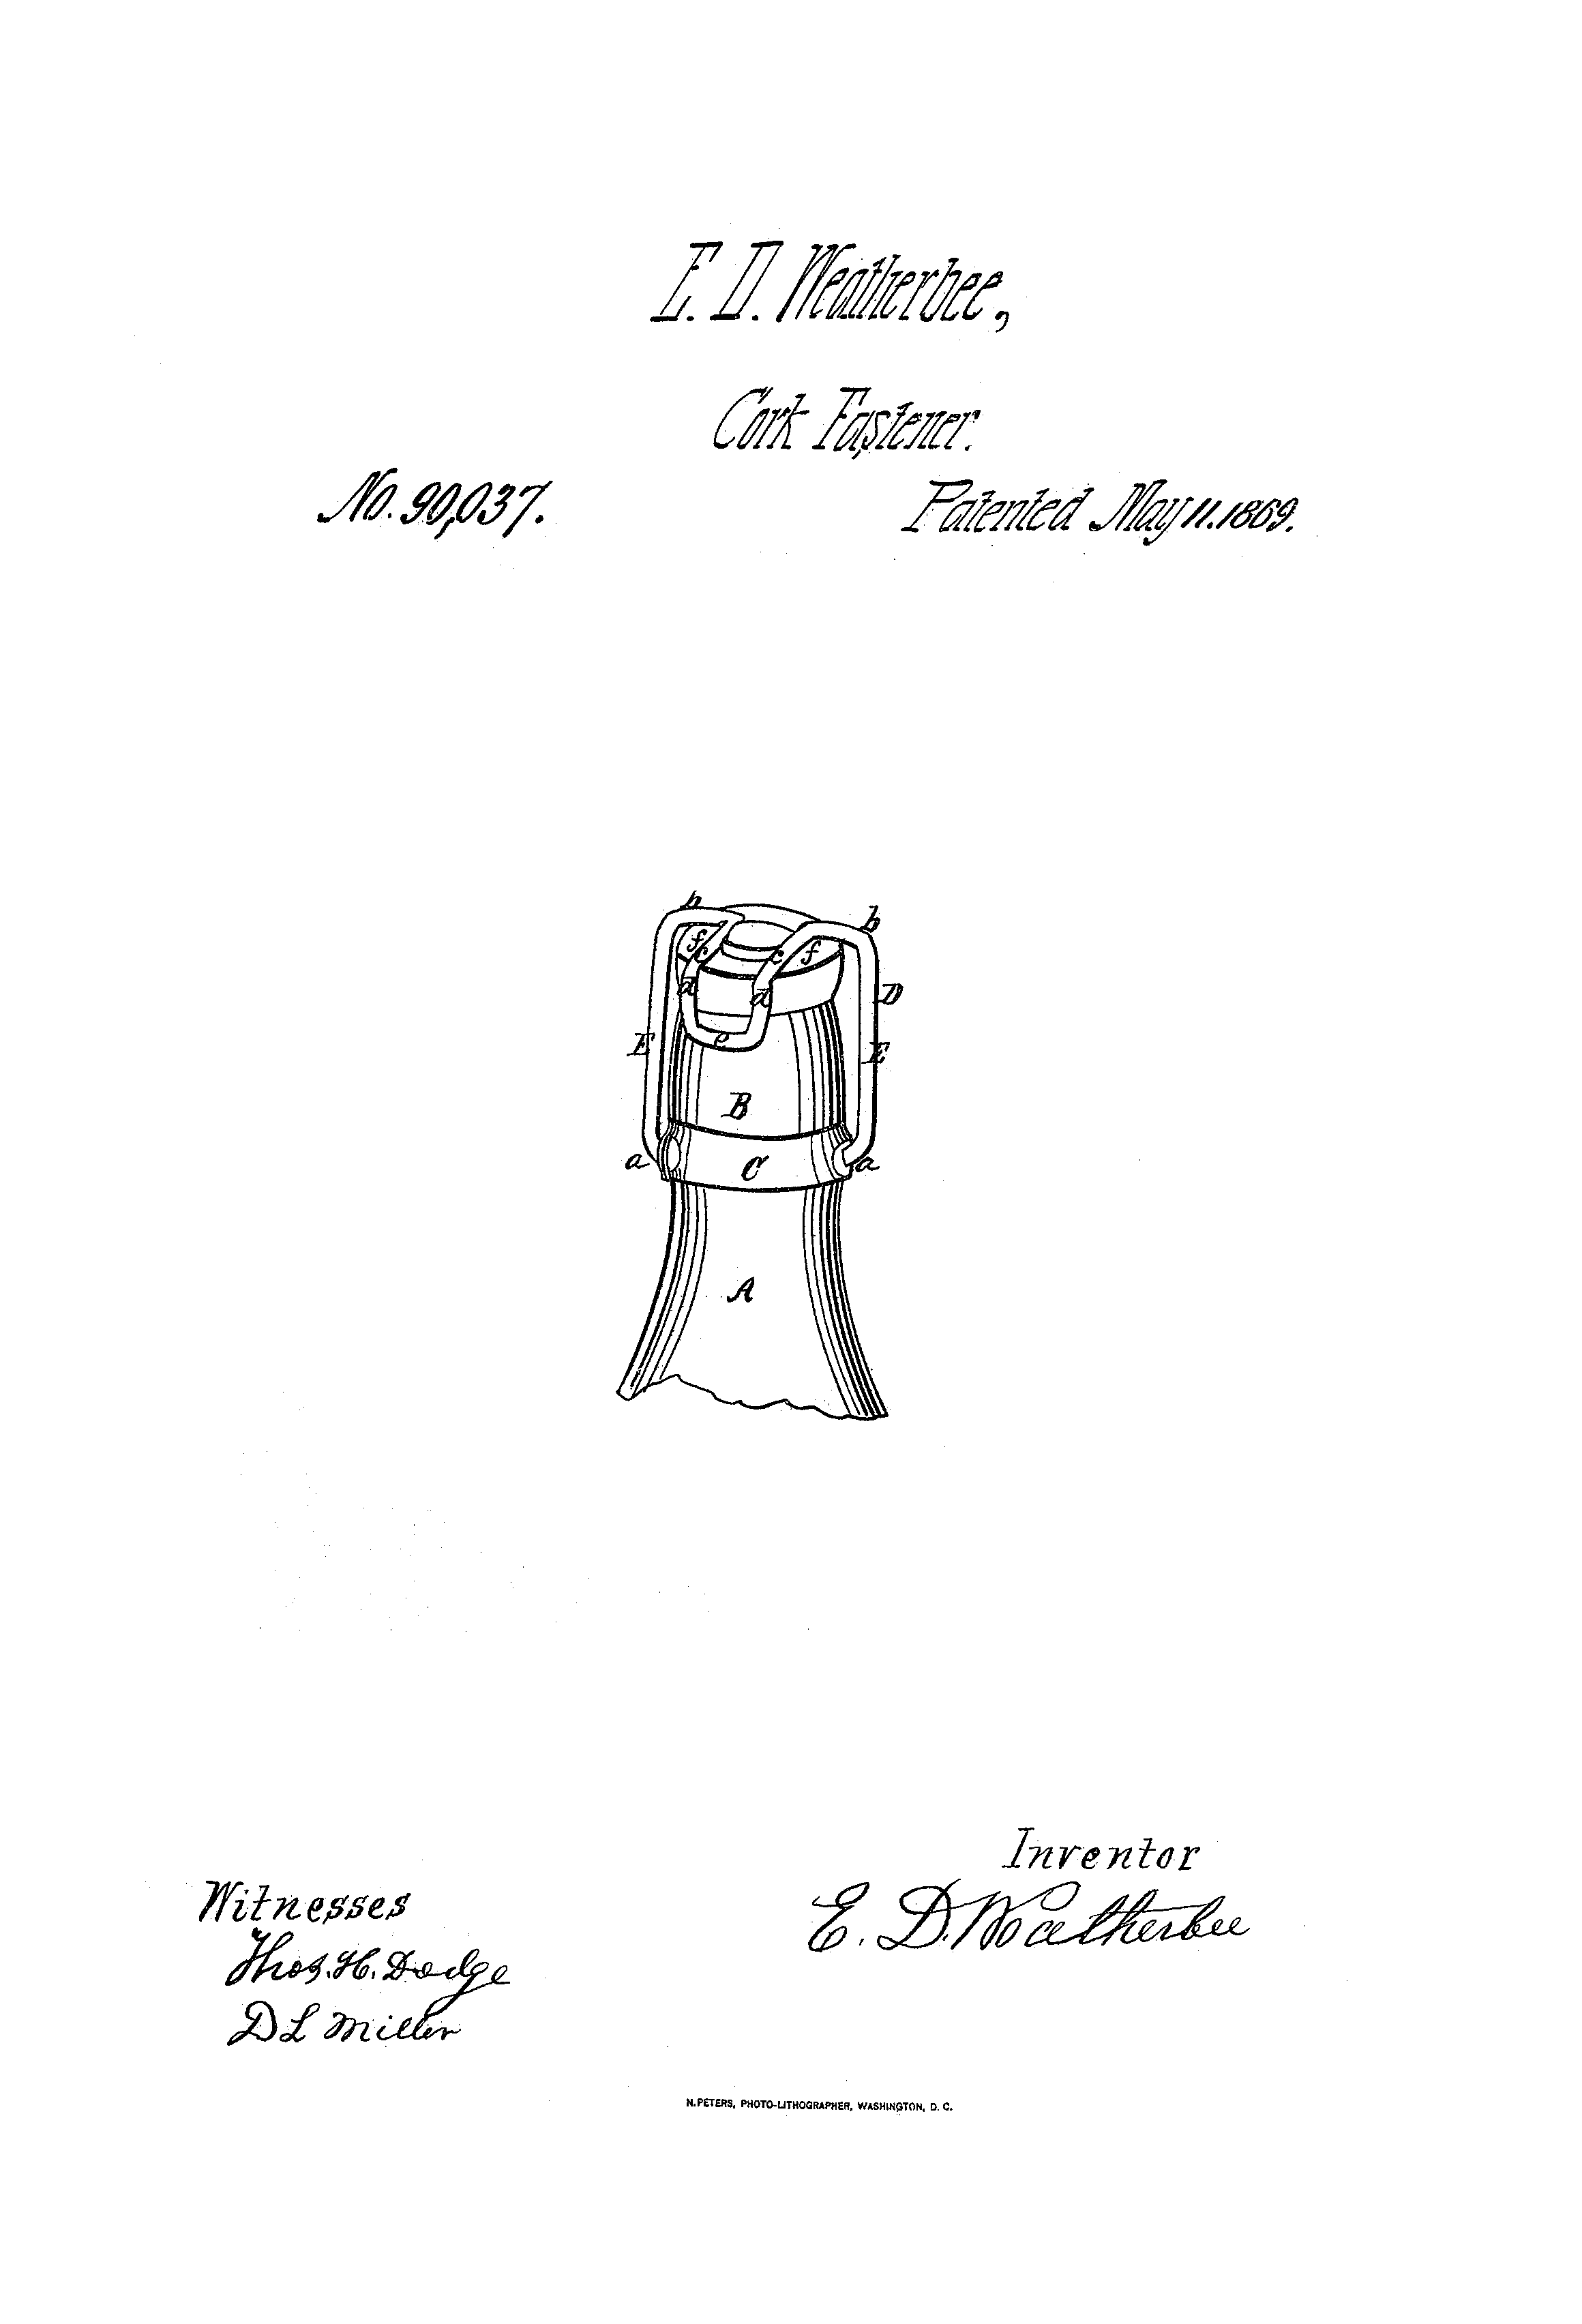 Patent 90,037